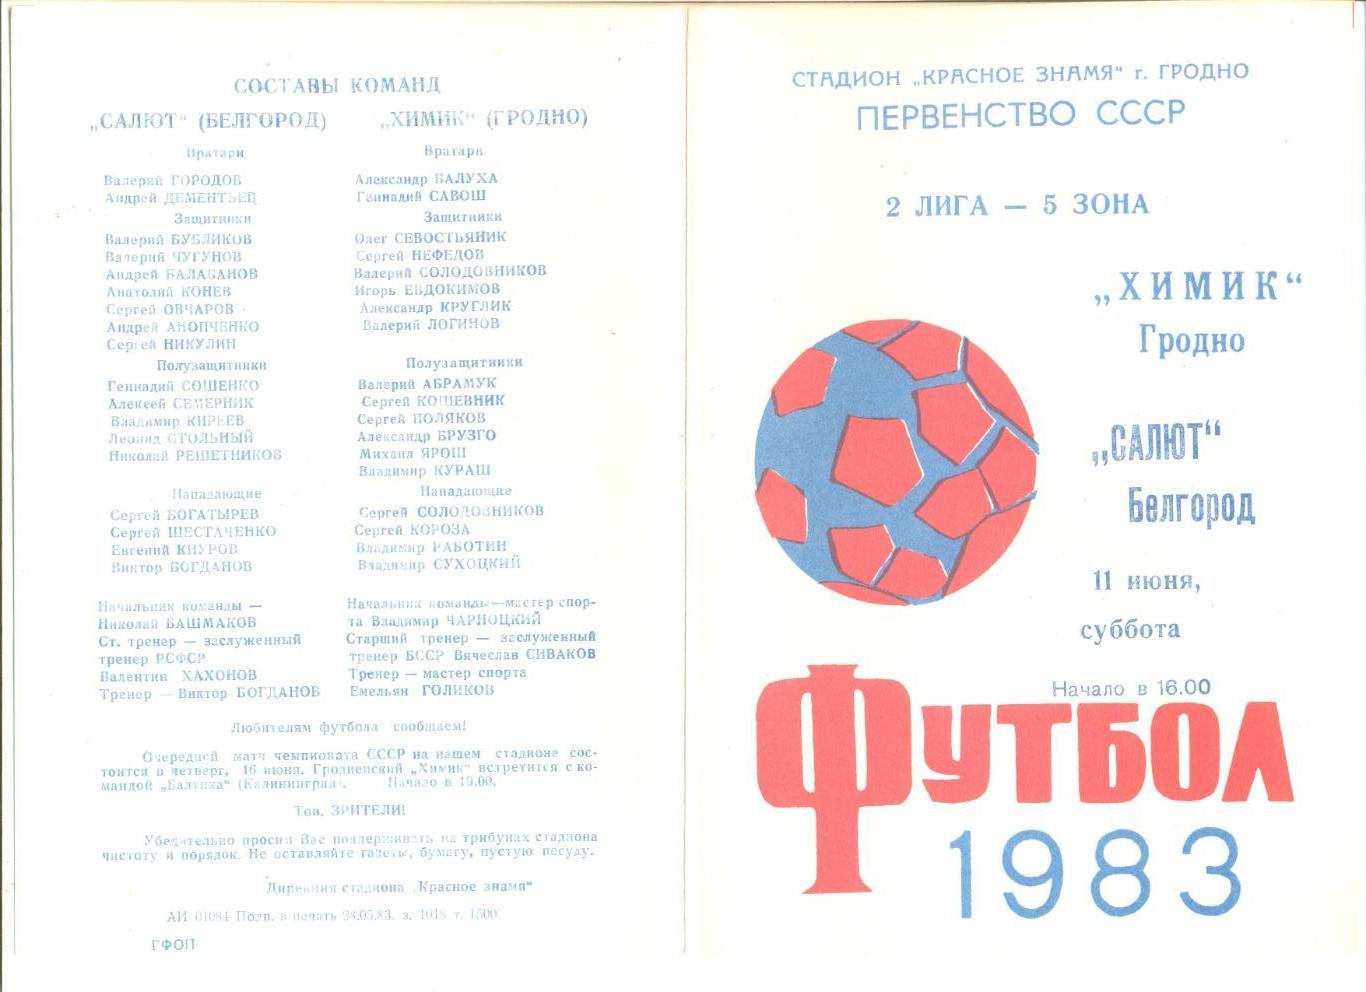 Химик Гродно - Салют Белгород 11.06.1983 г.